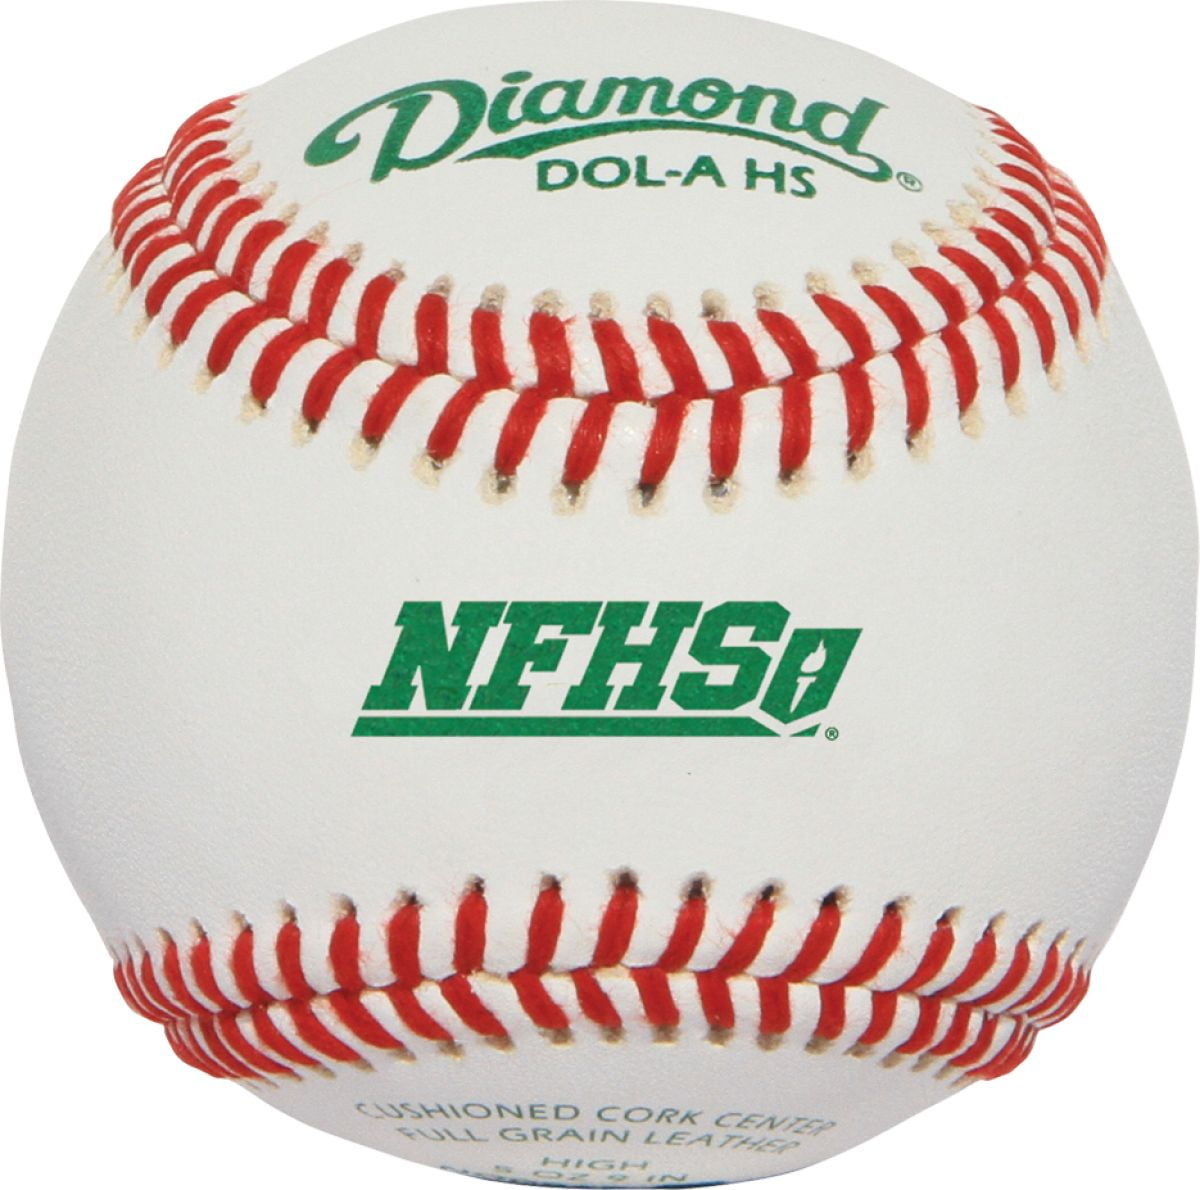 Rawlings Raised Seams Official NFHS High School Baseballs R100-H3 12 Count 